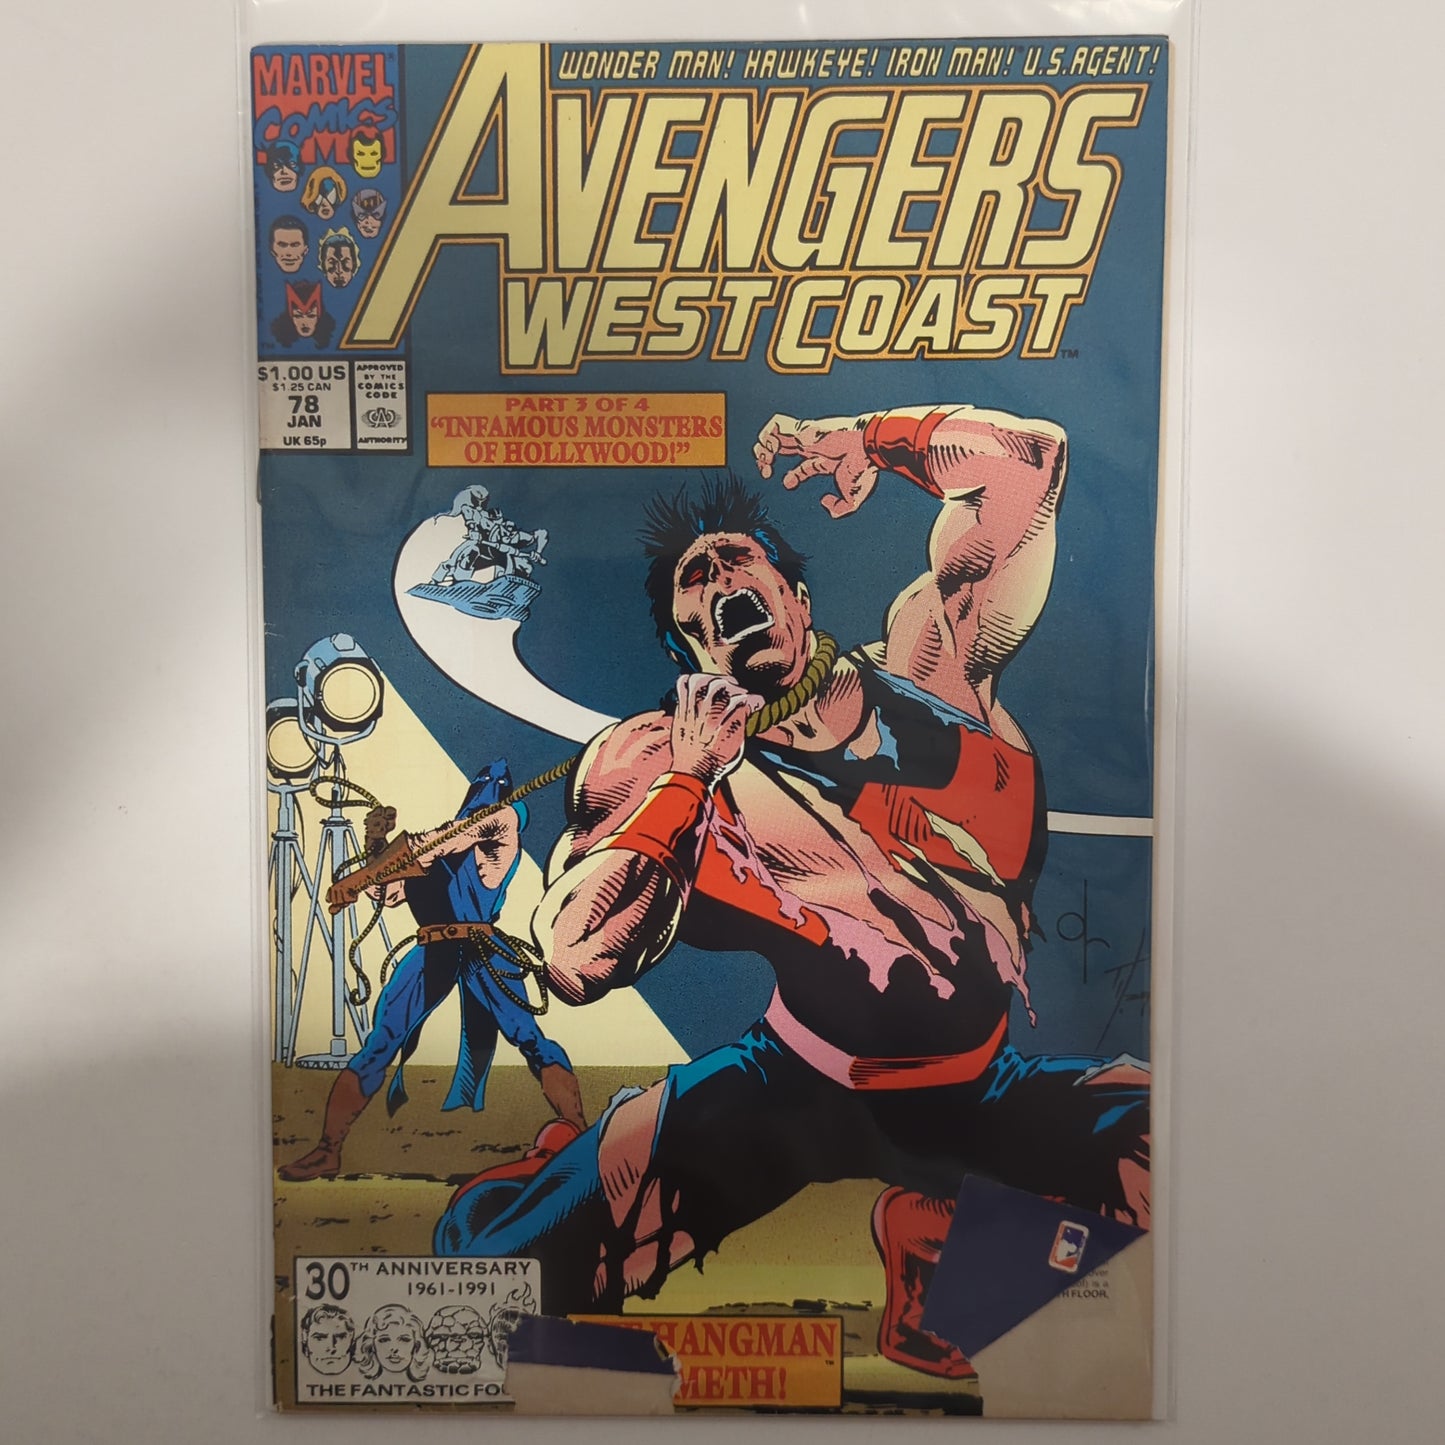 The West Coast Avengers #78